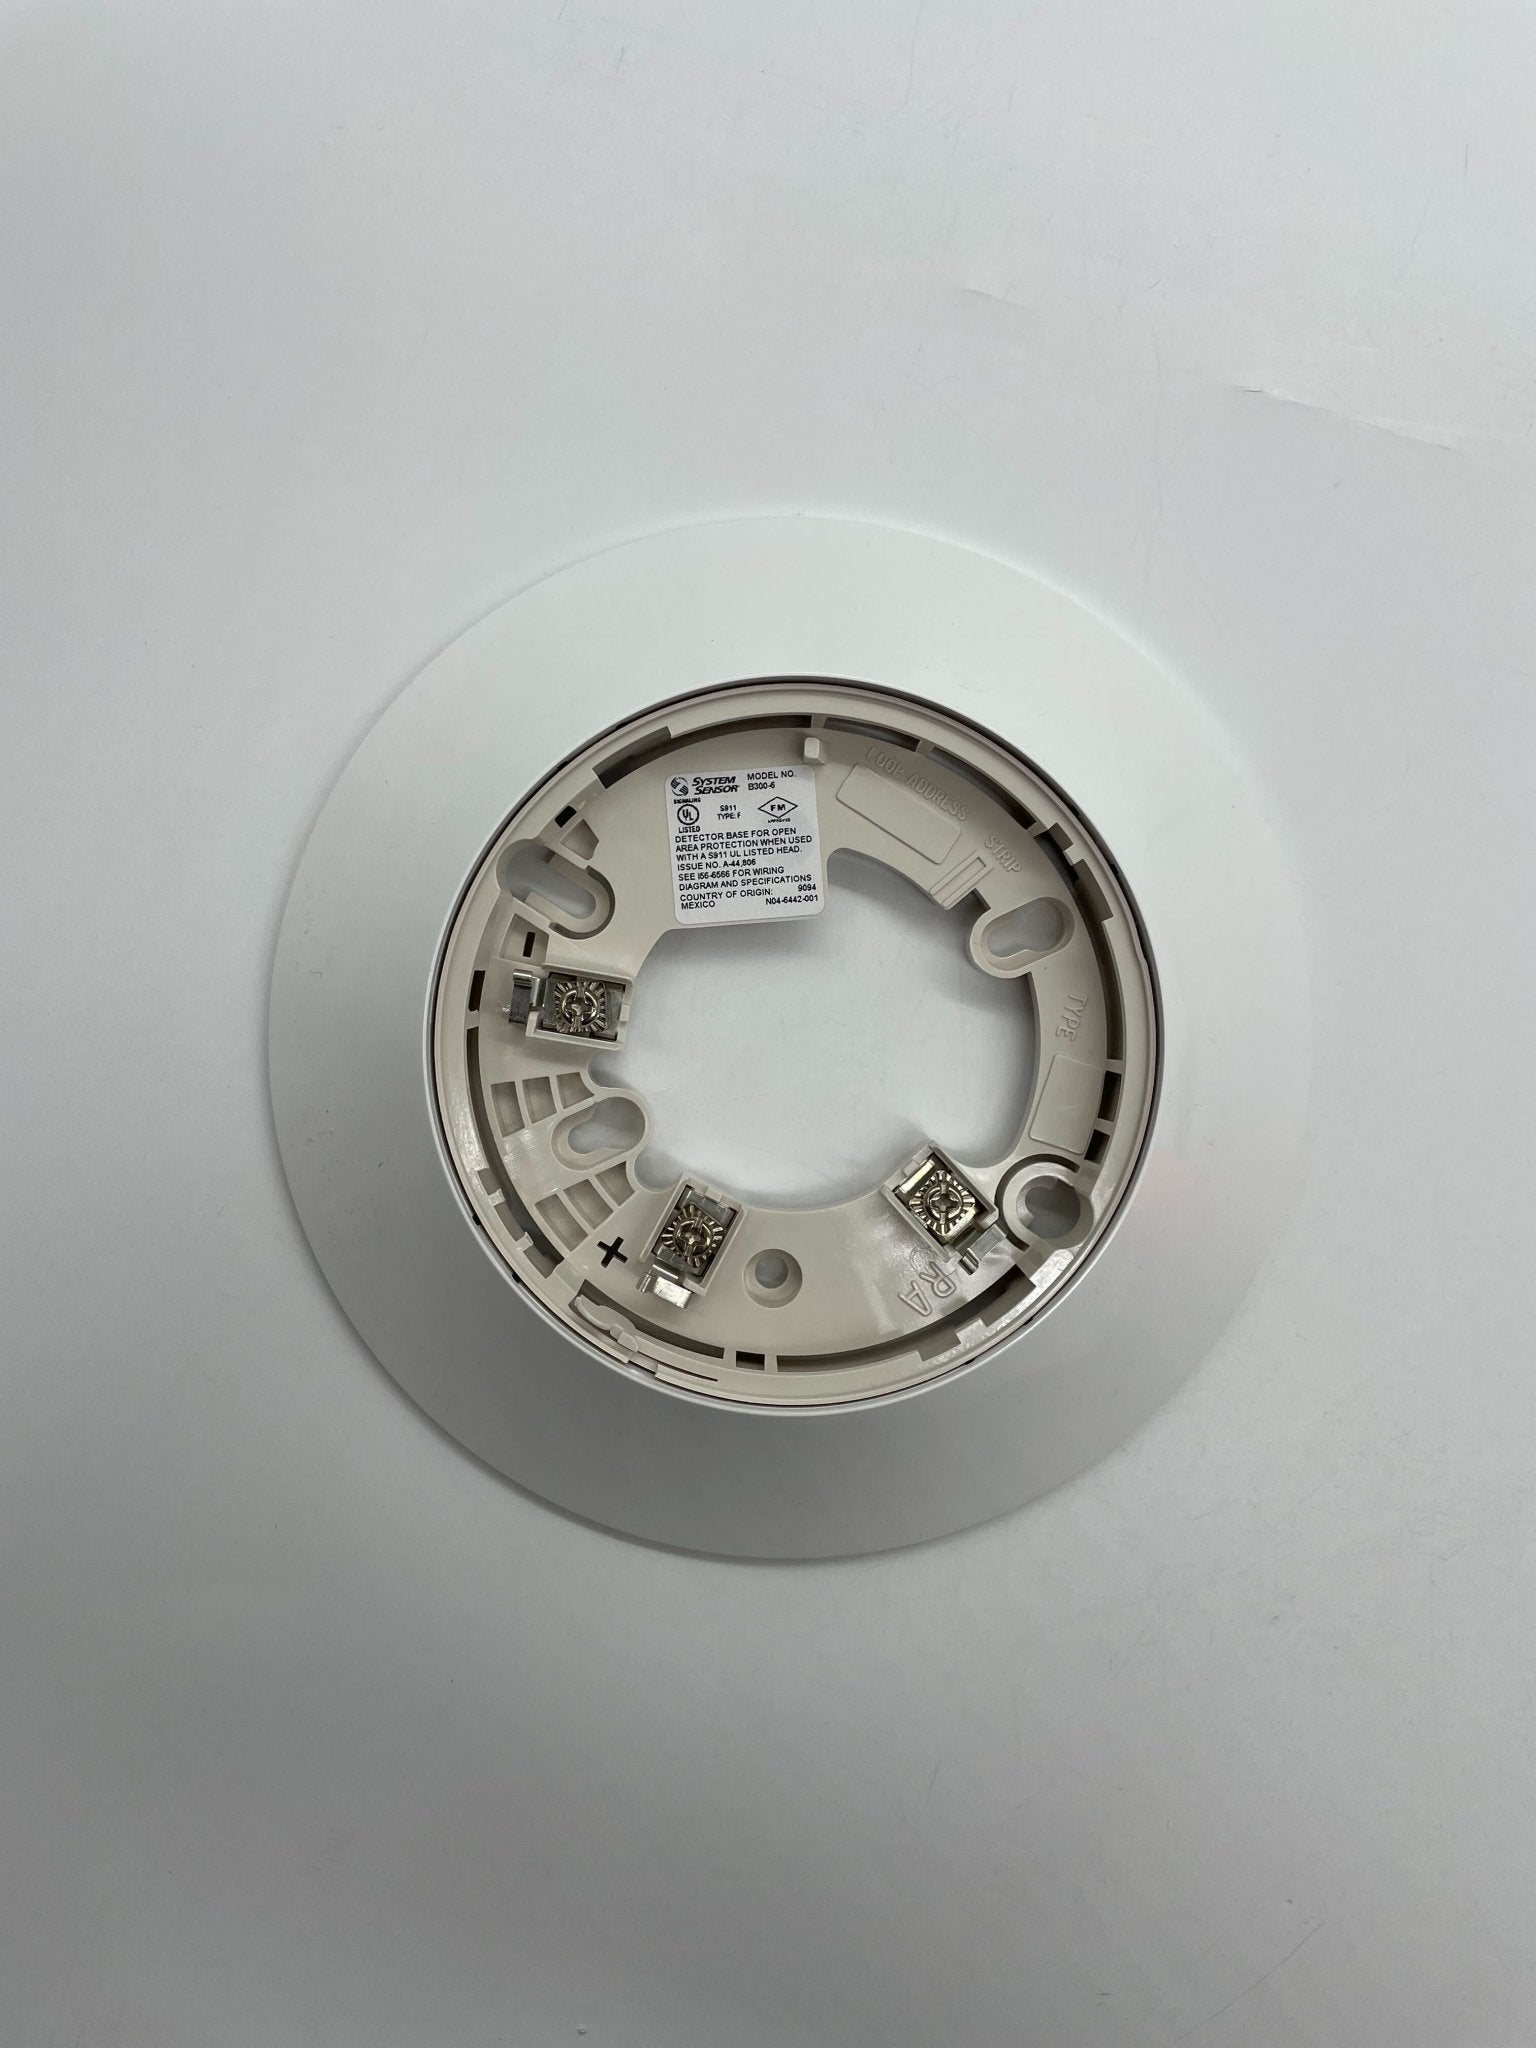 Silent Knight SK-PTIR-W Smoke Detector - The Fire Alarm Supplier